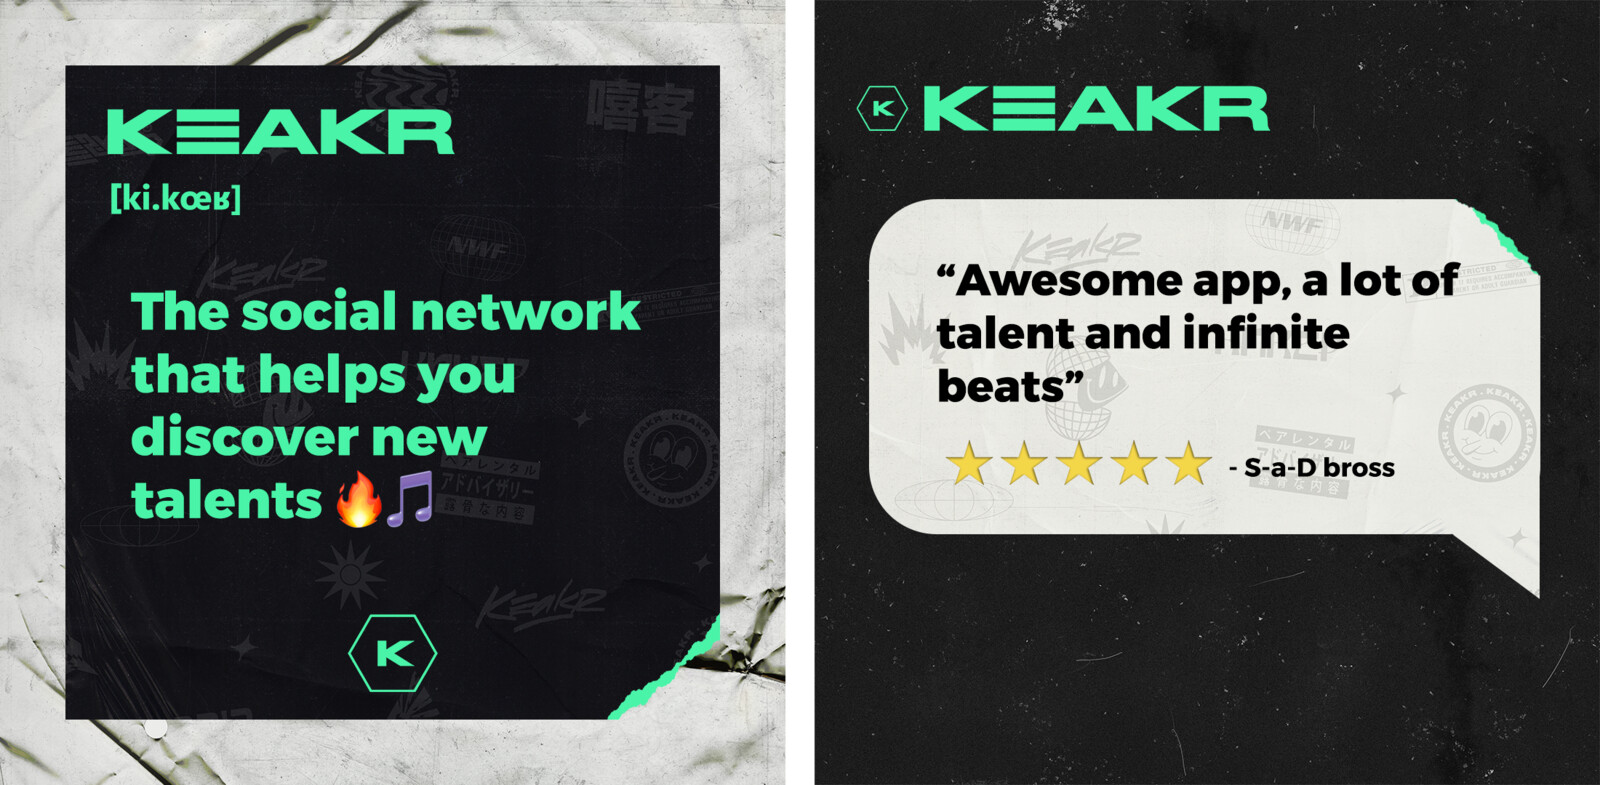 Static ads for KEAKR, a rap music sharing app